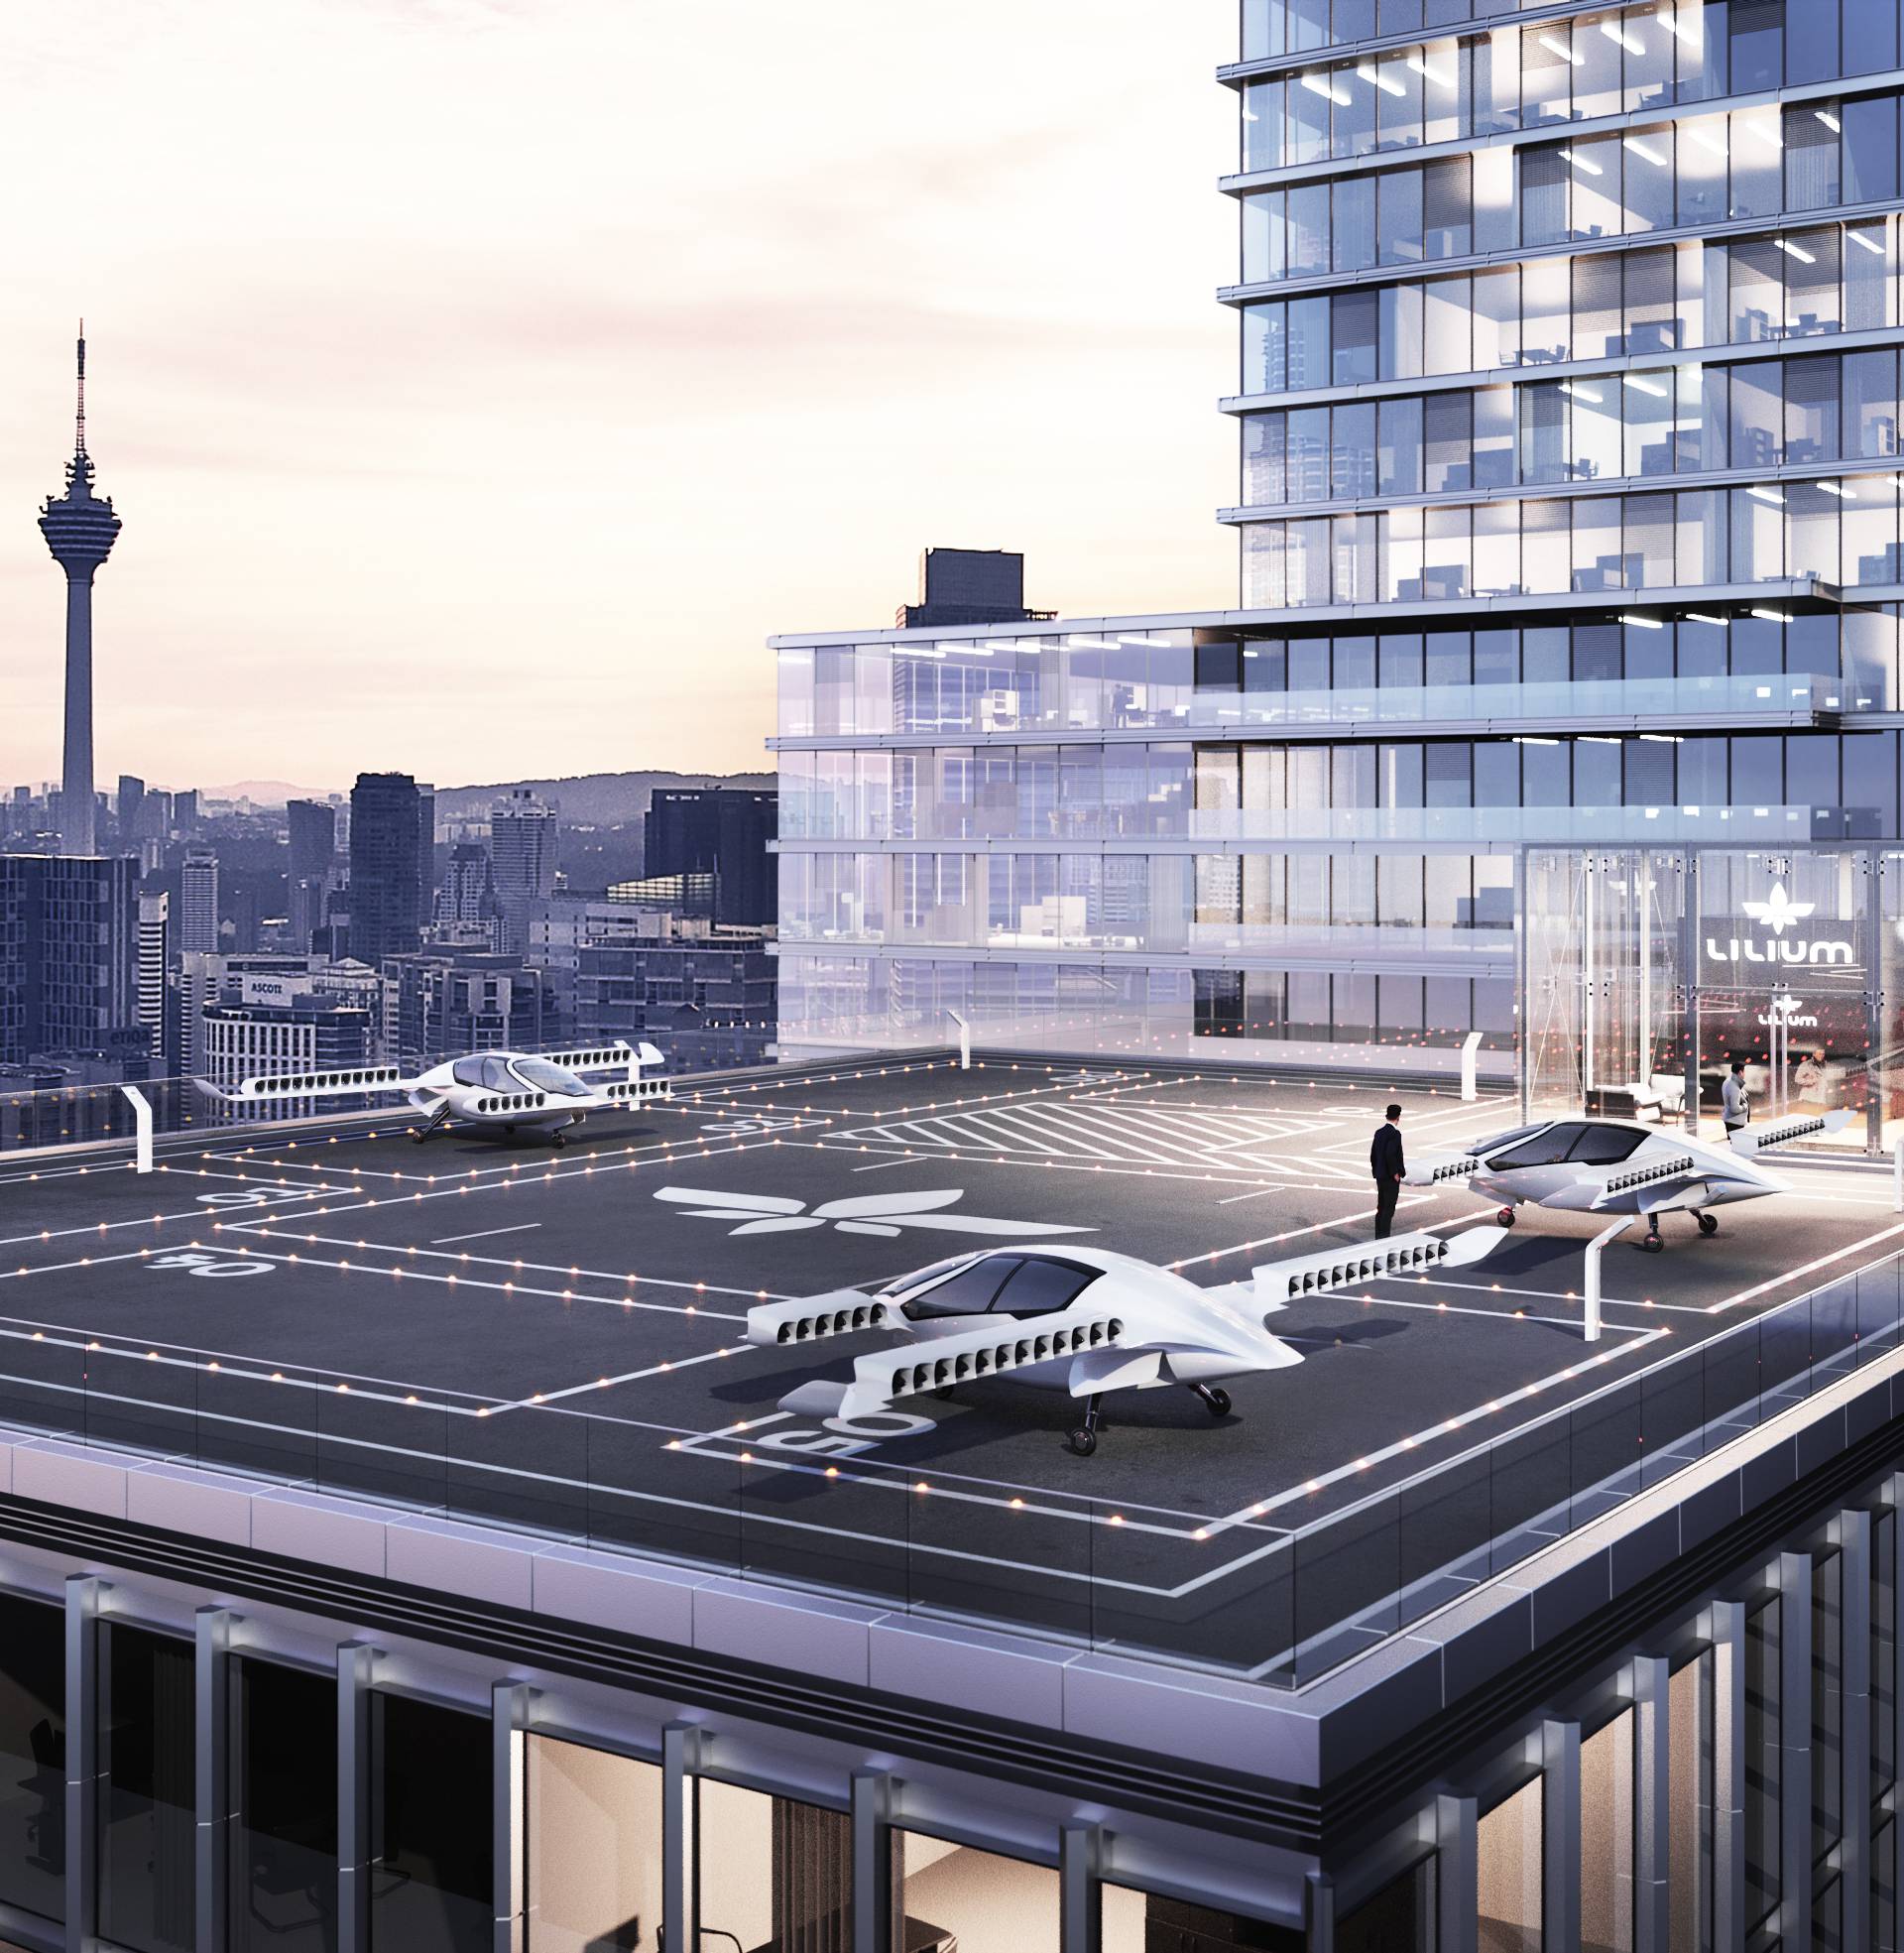 Rade električni leteći taksi, s krovova će poletjeti već 2019.